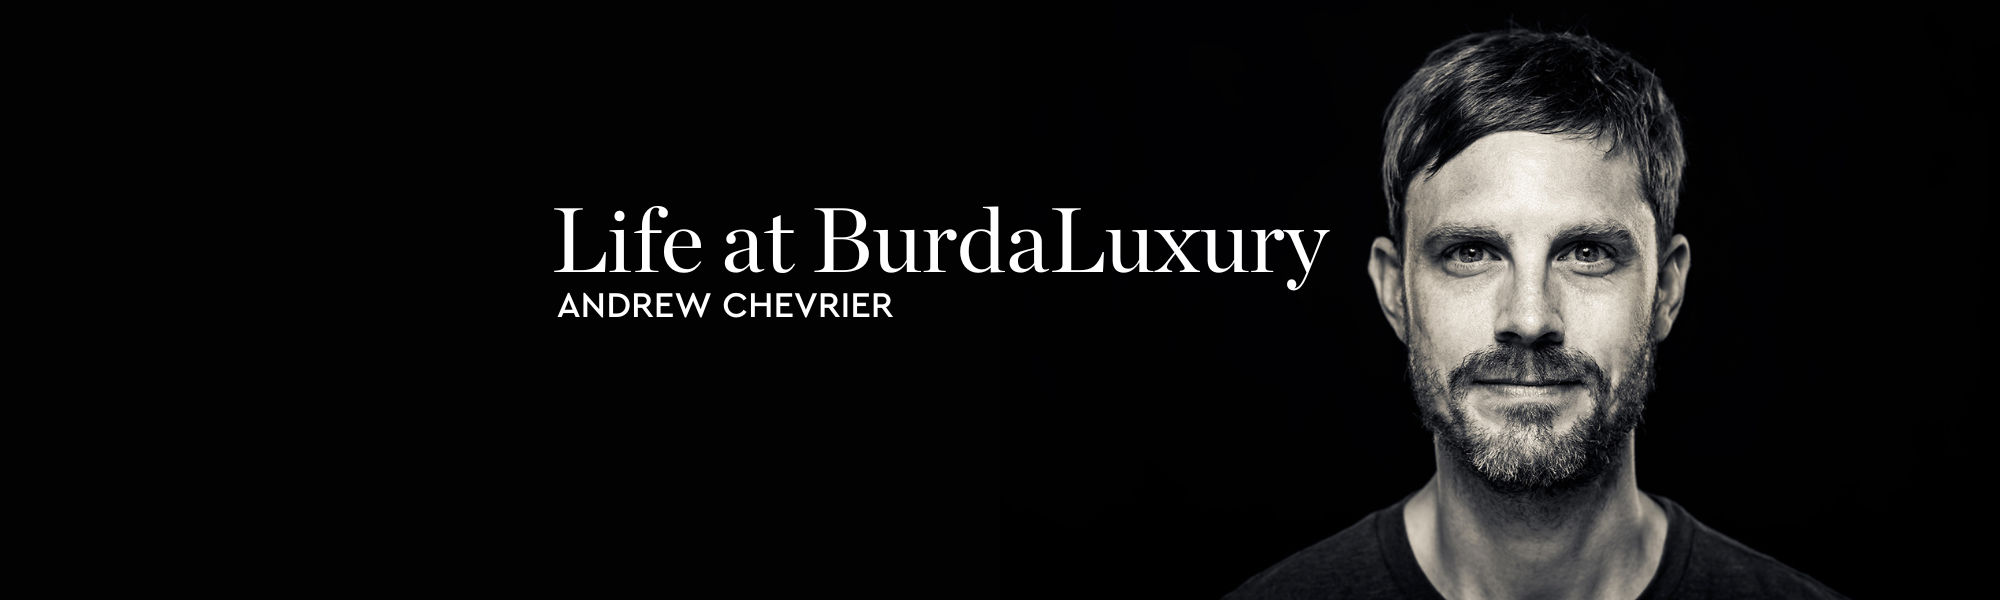 Life at BurdaLuxury – Andrew Chevrier